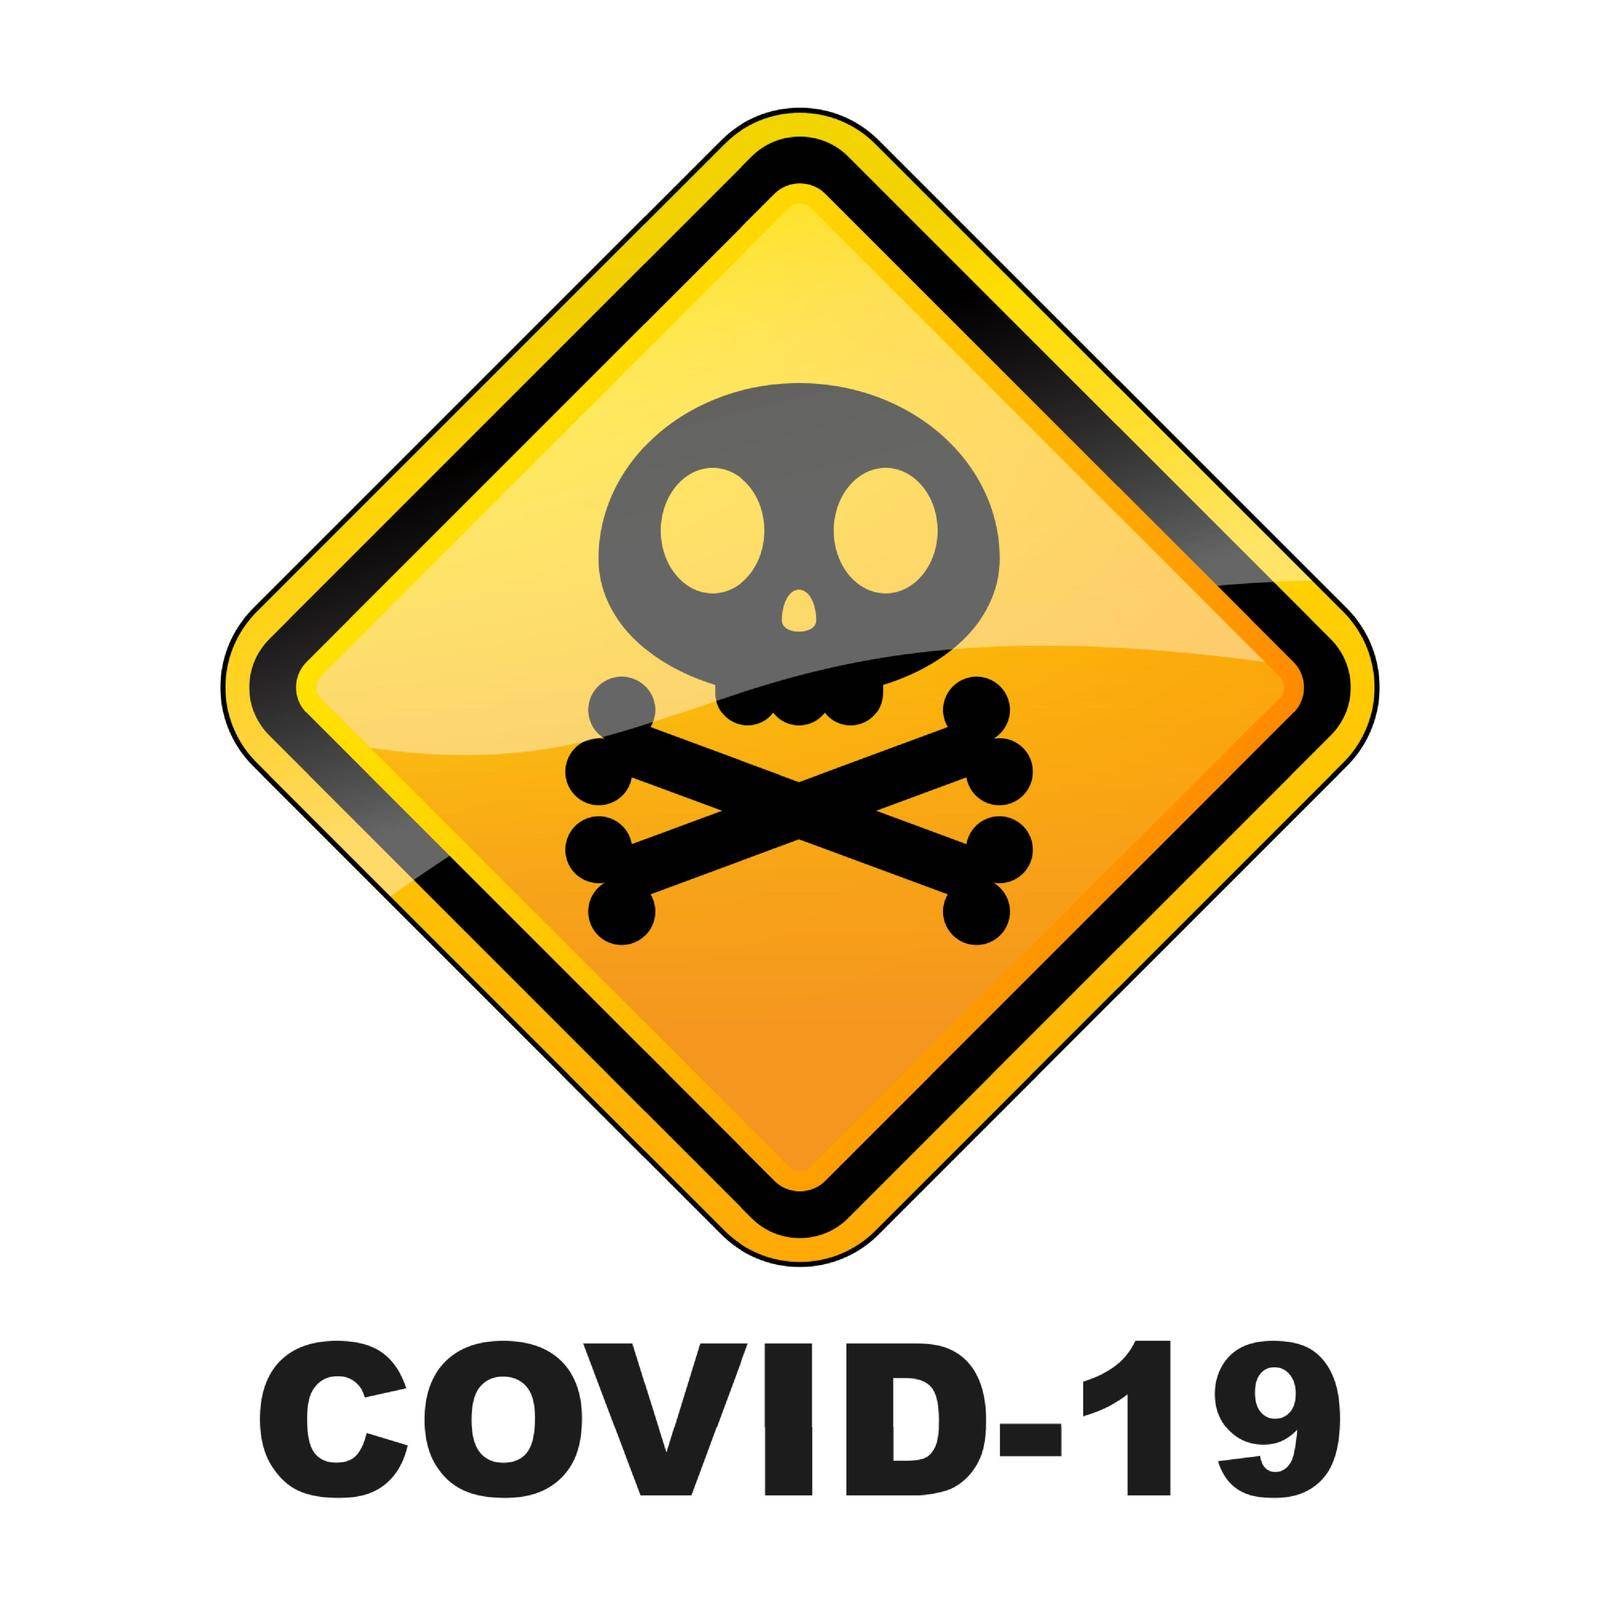 Covid-19 warning symbol. Coronavirus danger sign with skull. Epidemic coronavirus concept. Vector illustration.